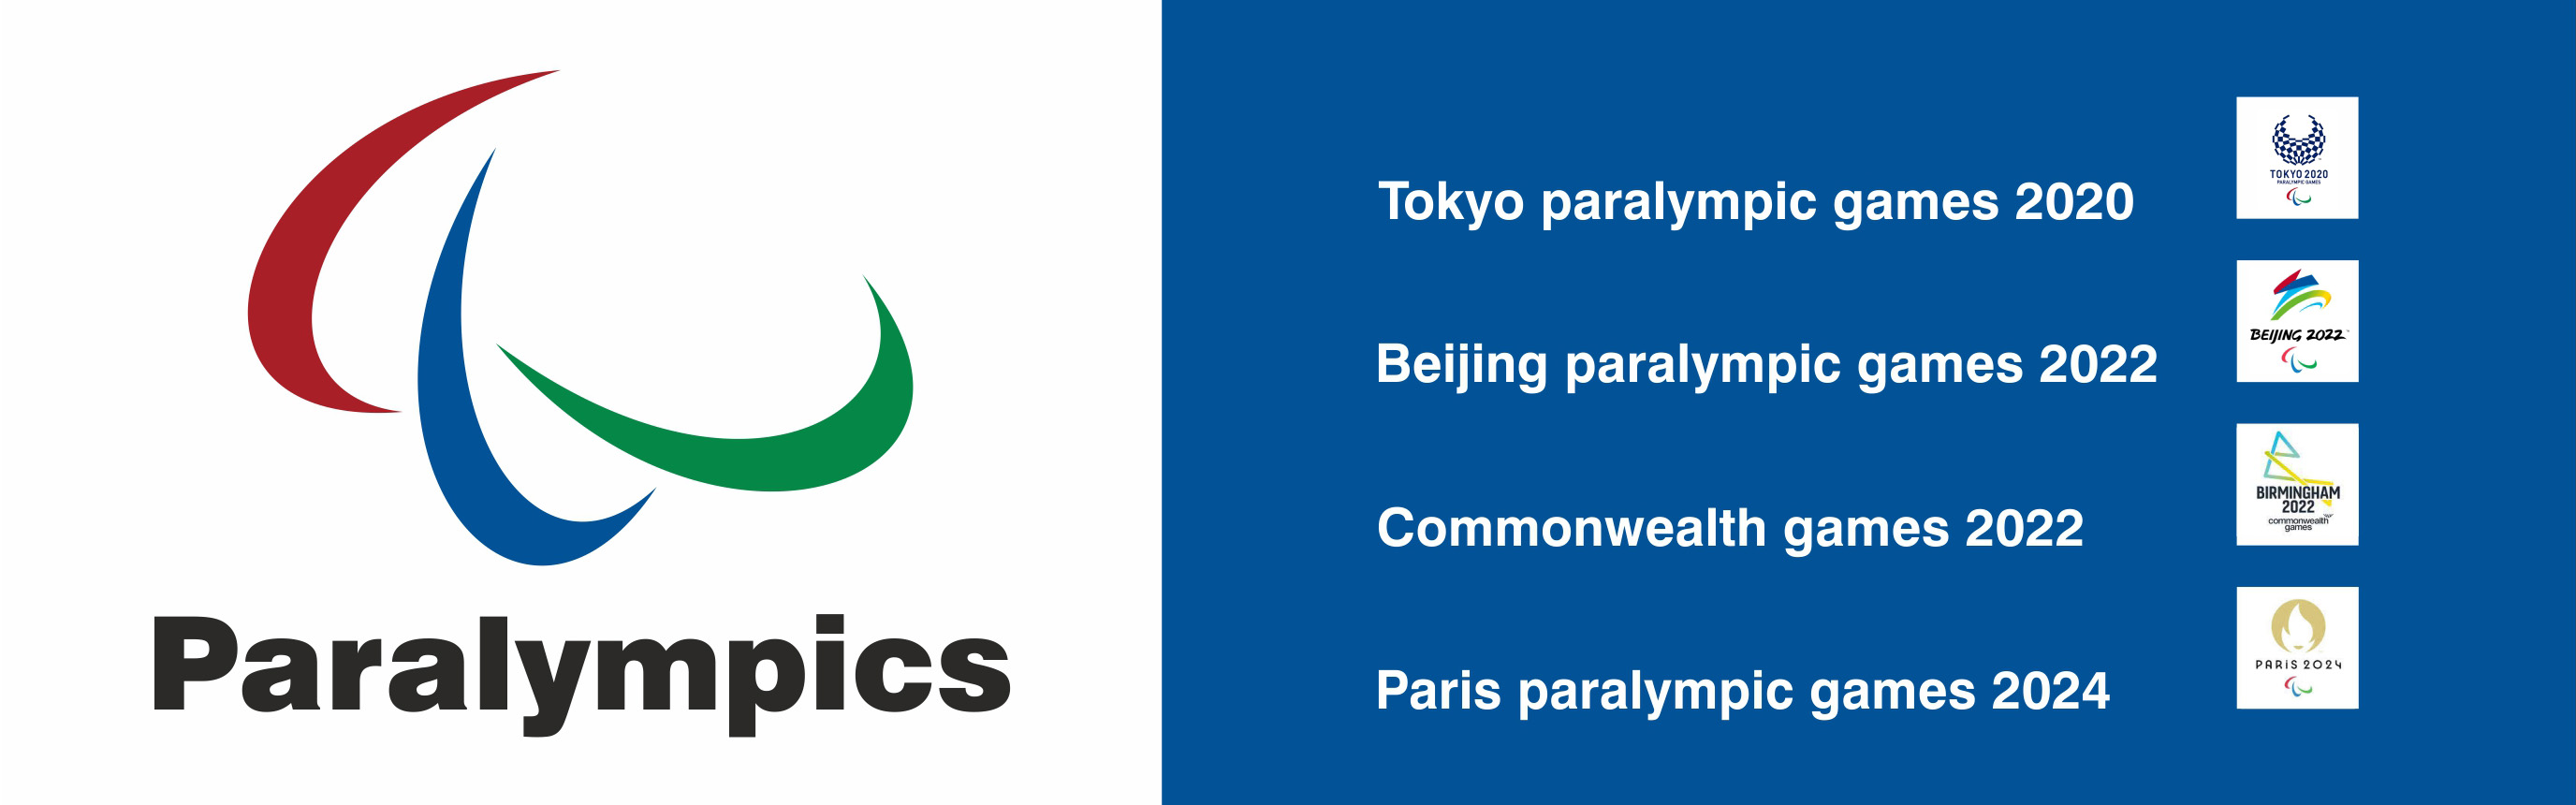 Logos for Tokyo paralympic games 2022, Beijing 2022, Commonwealth 2022, Paris 2024